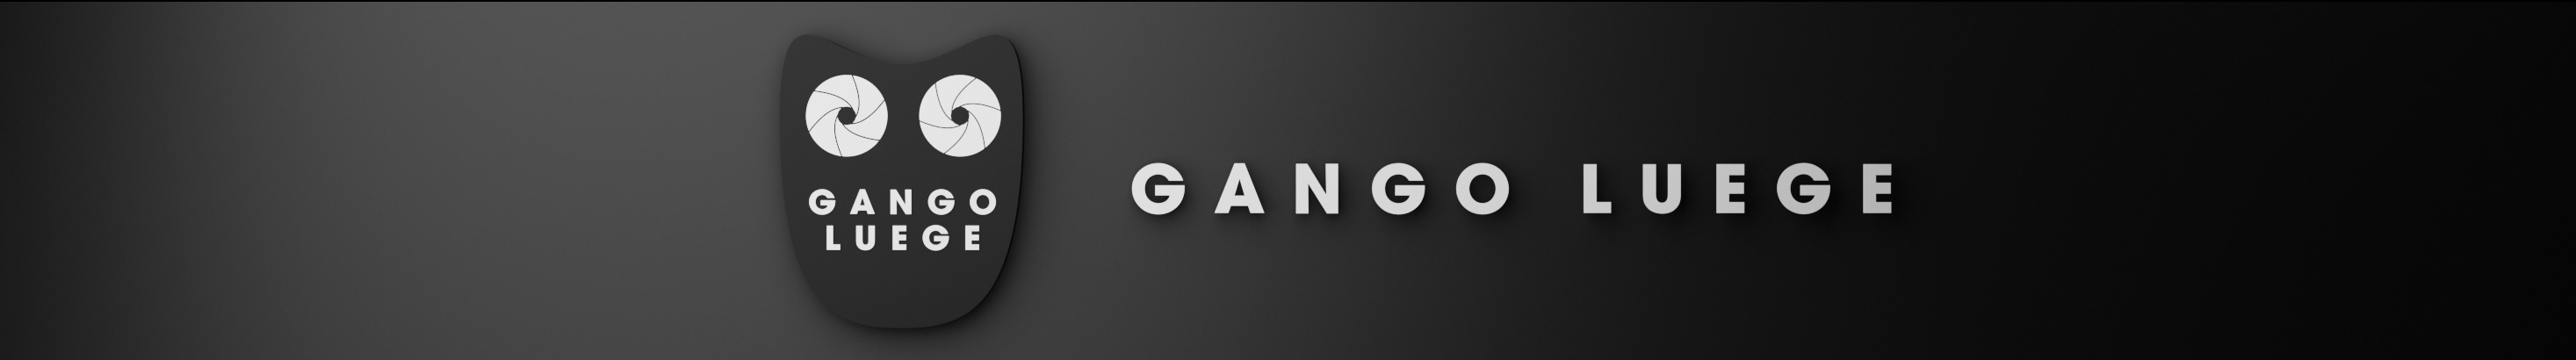 GANGO LUEGE's profile banner